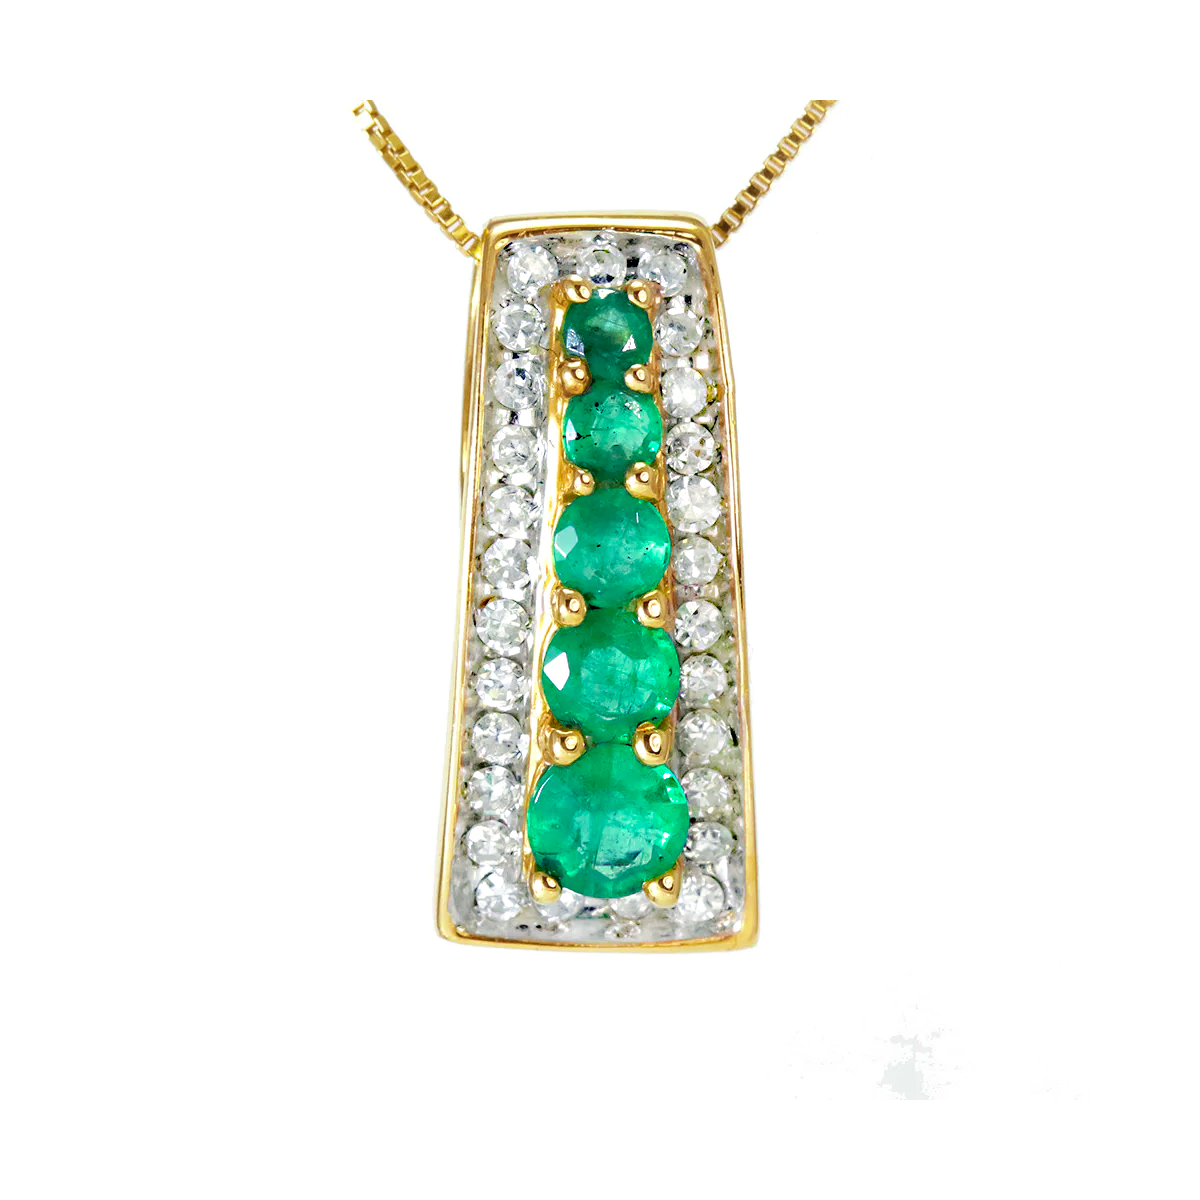 14k yellow gold emerald and diamond pendant